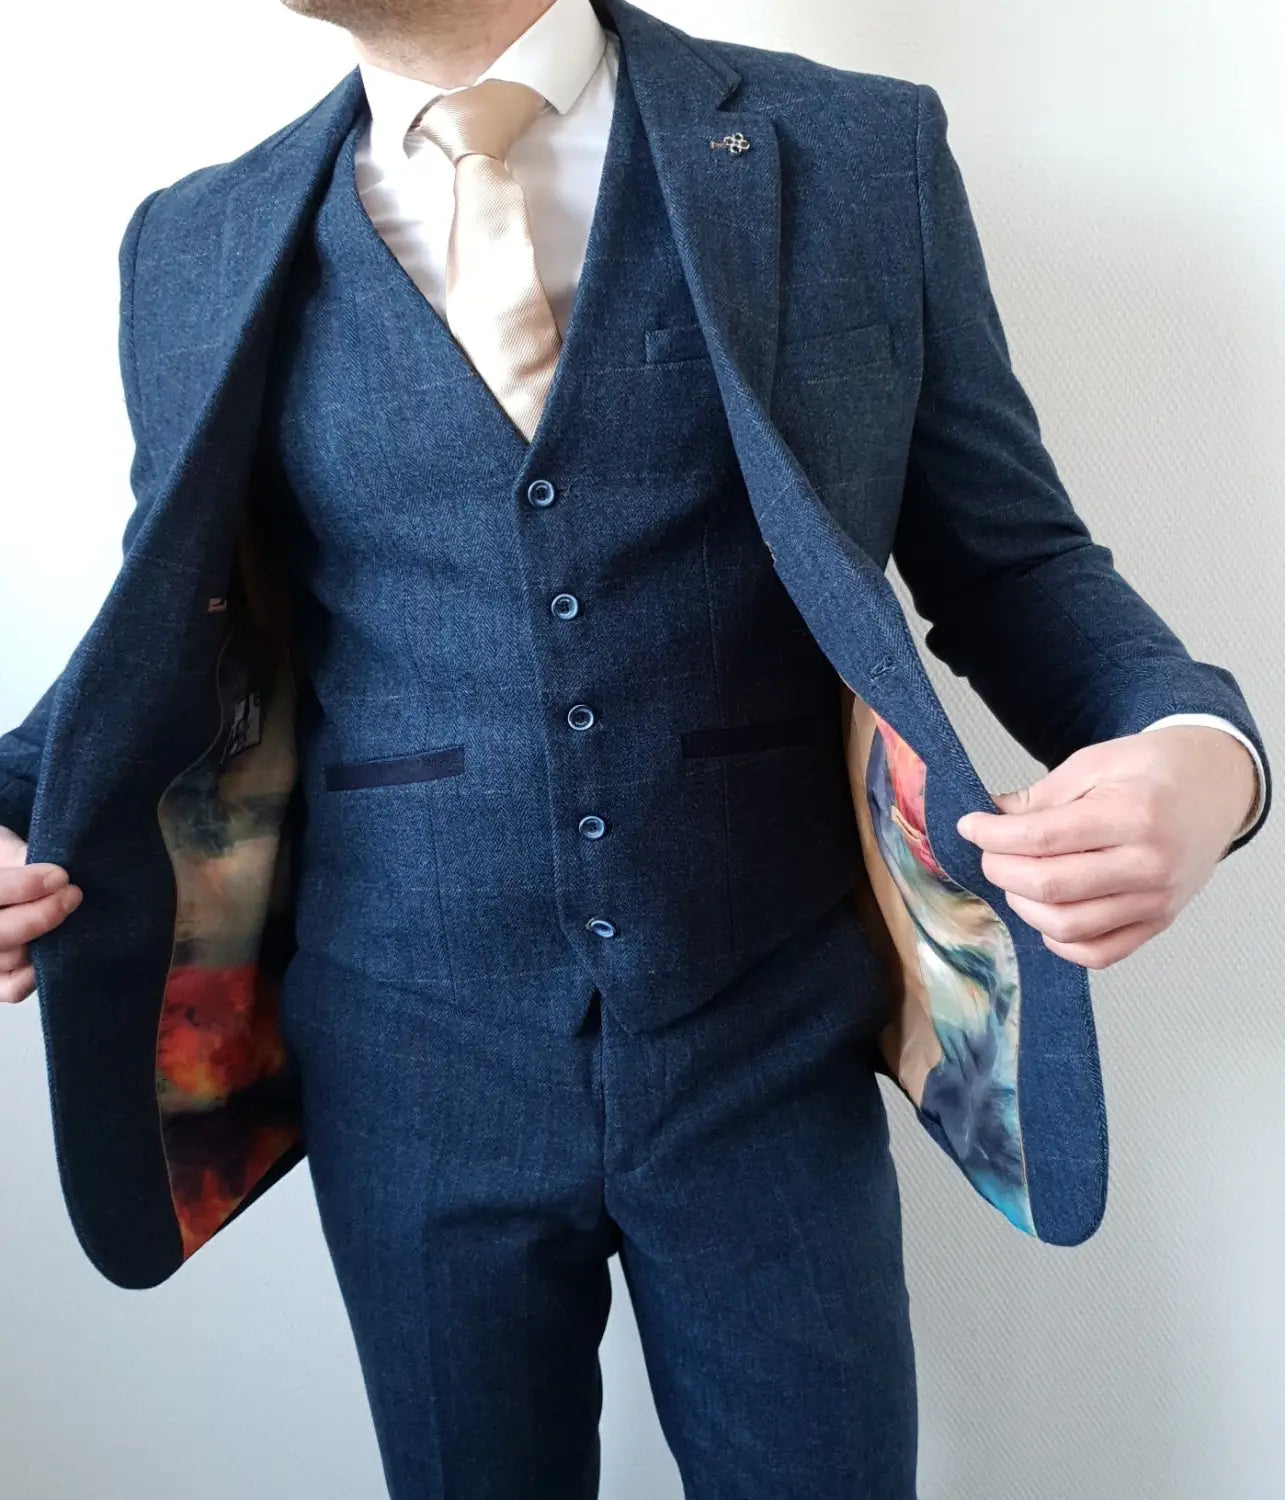 Three-piece suit by Cavani